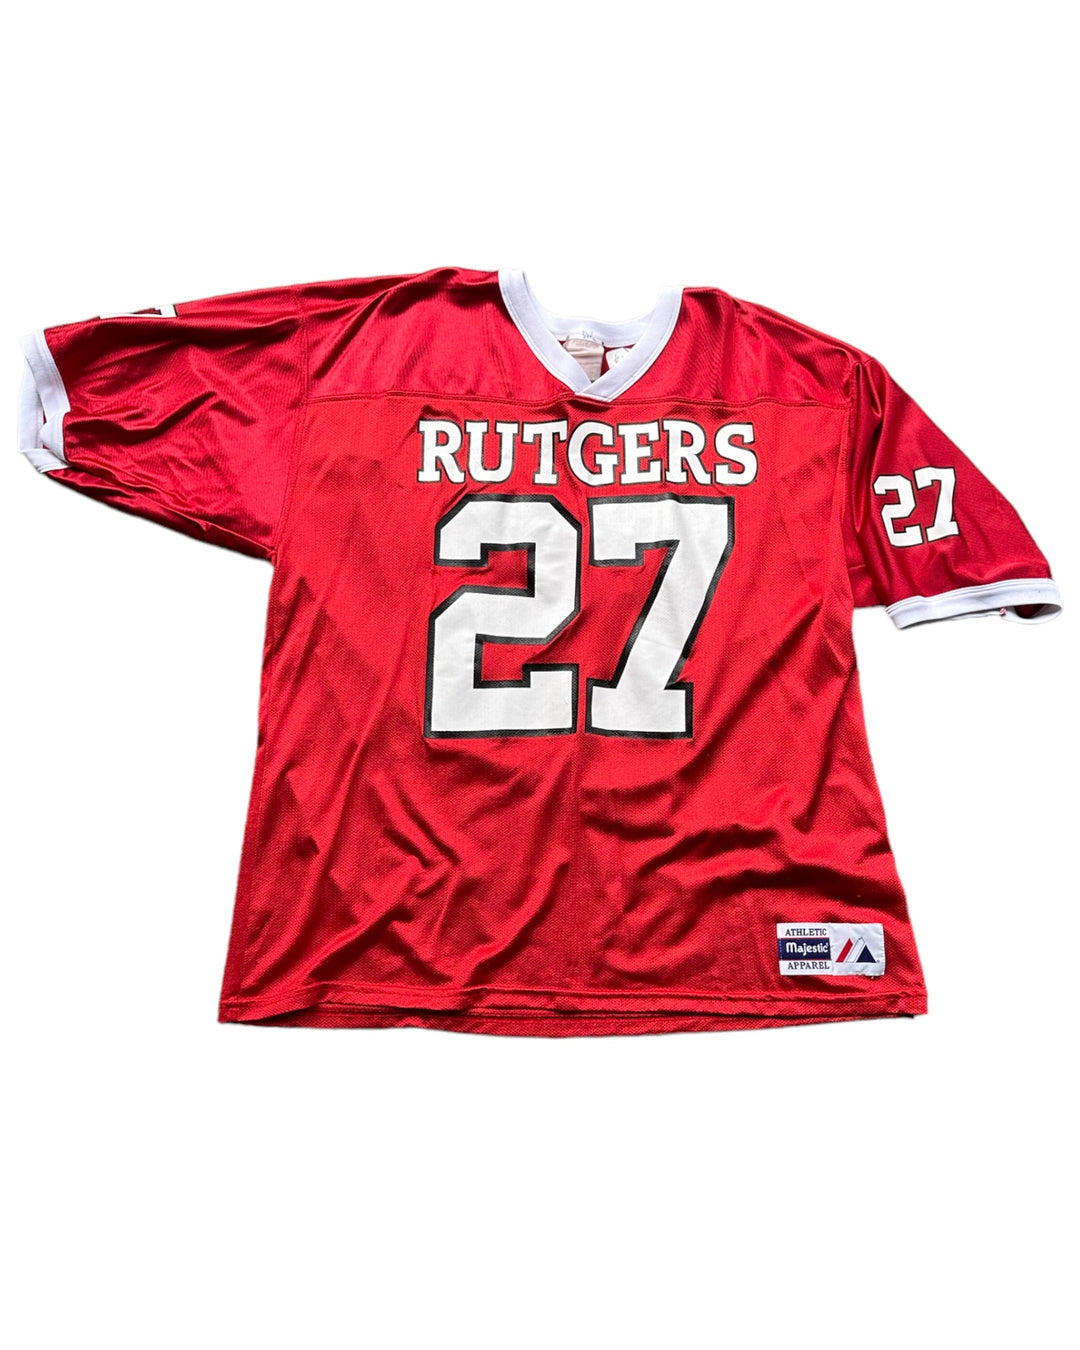 Rutgers Vintage Jersey